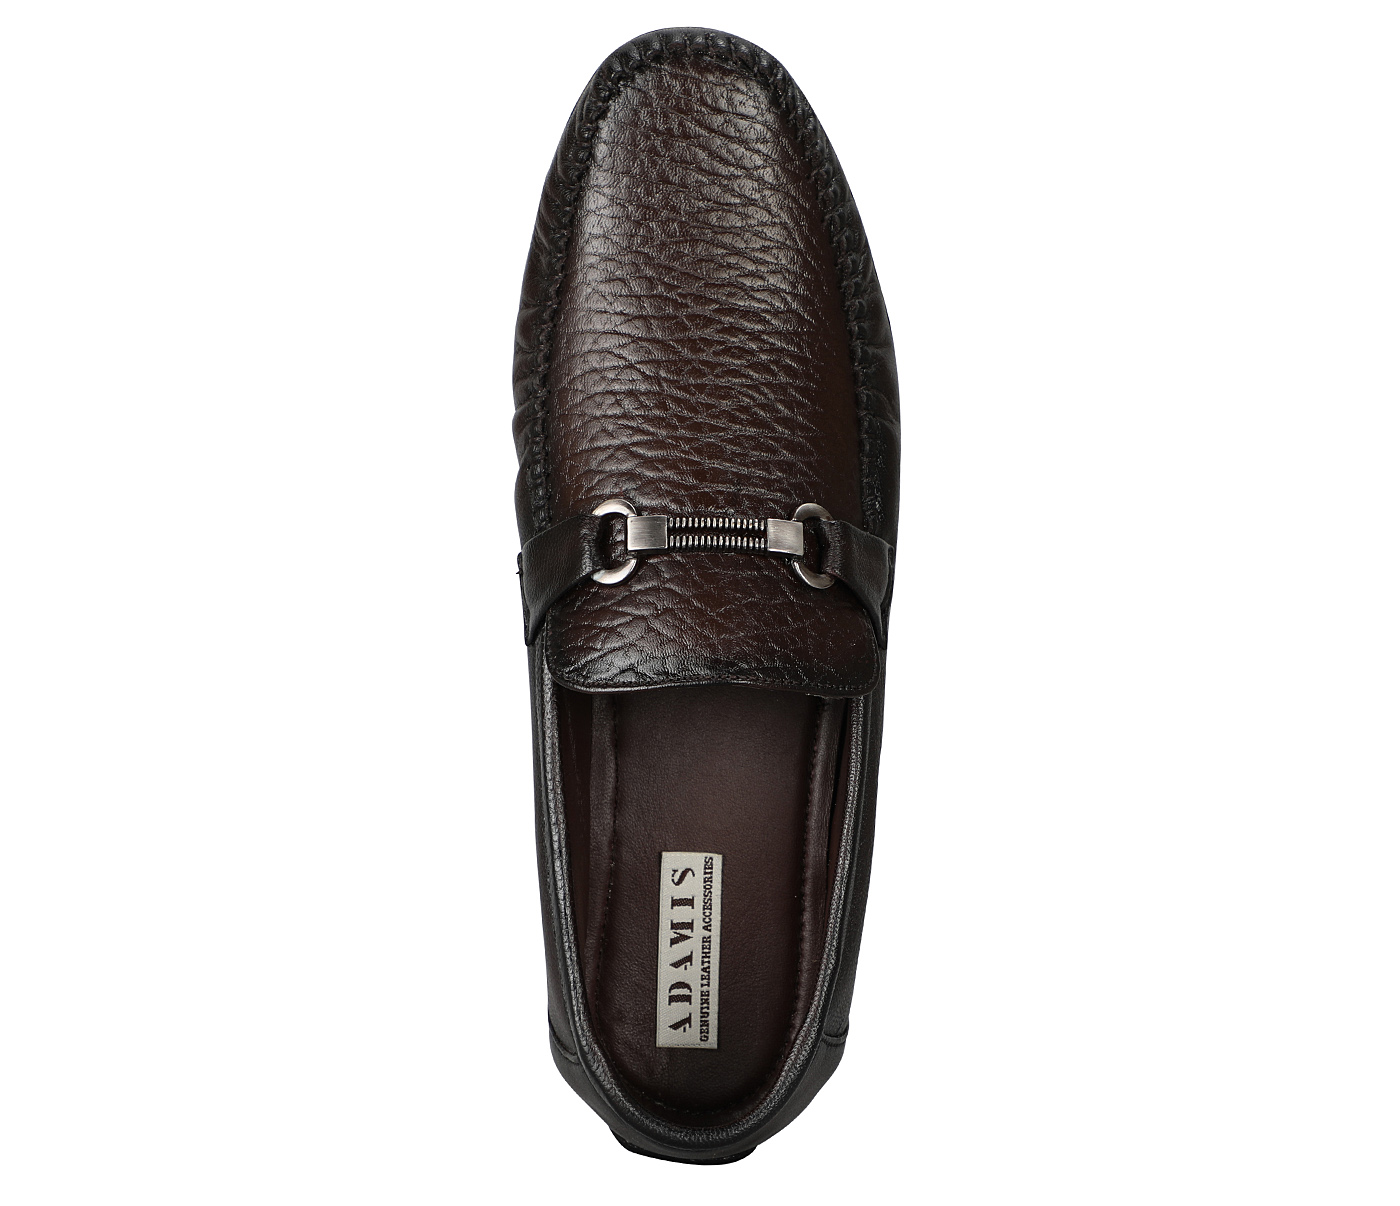 MG12-Adamis-Brown Color Pure Leather Footwear For Men - Brown